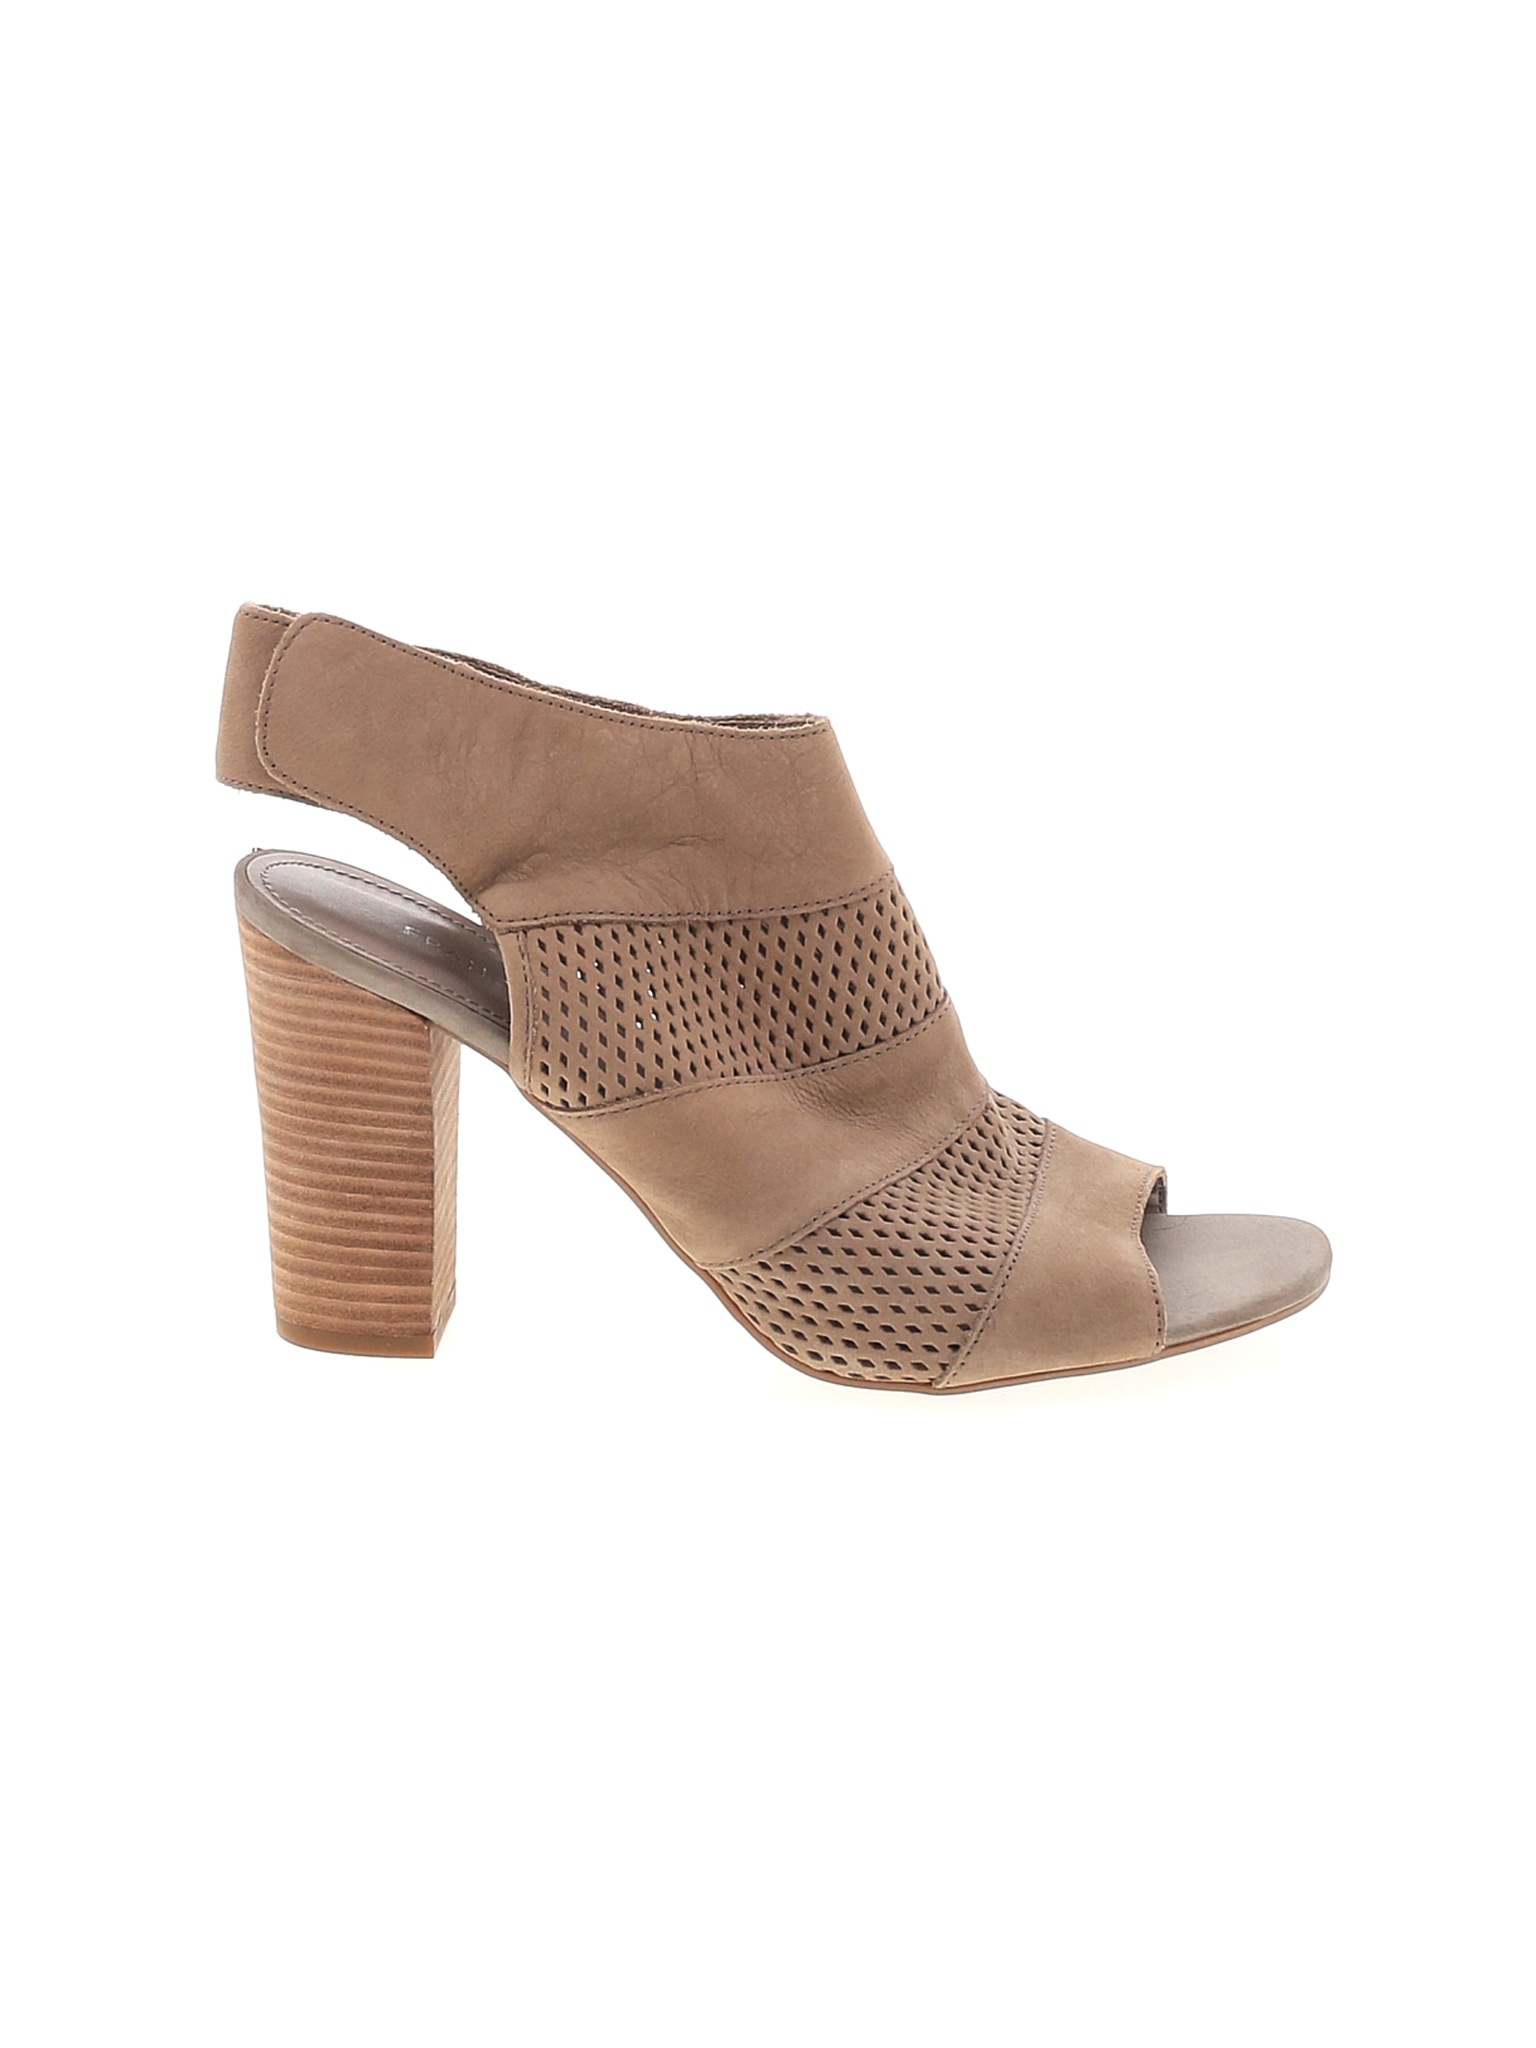 Franco Sarto Women Brown Sandals US 10.5 | eBay